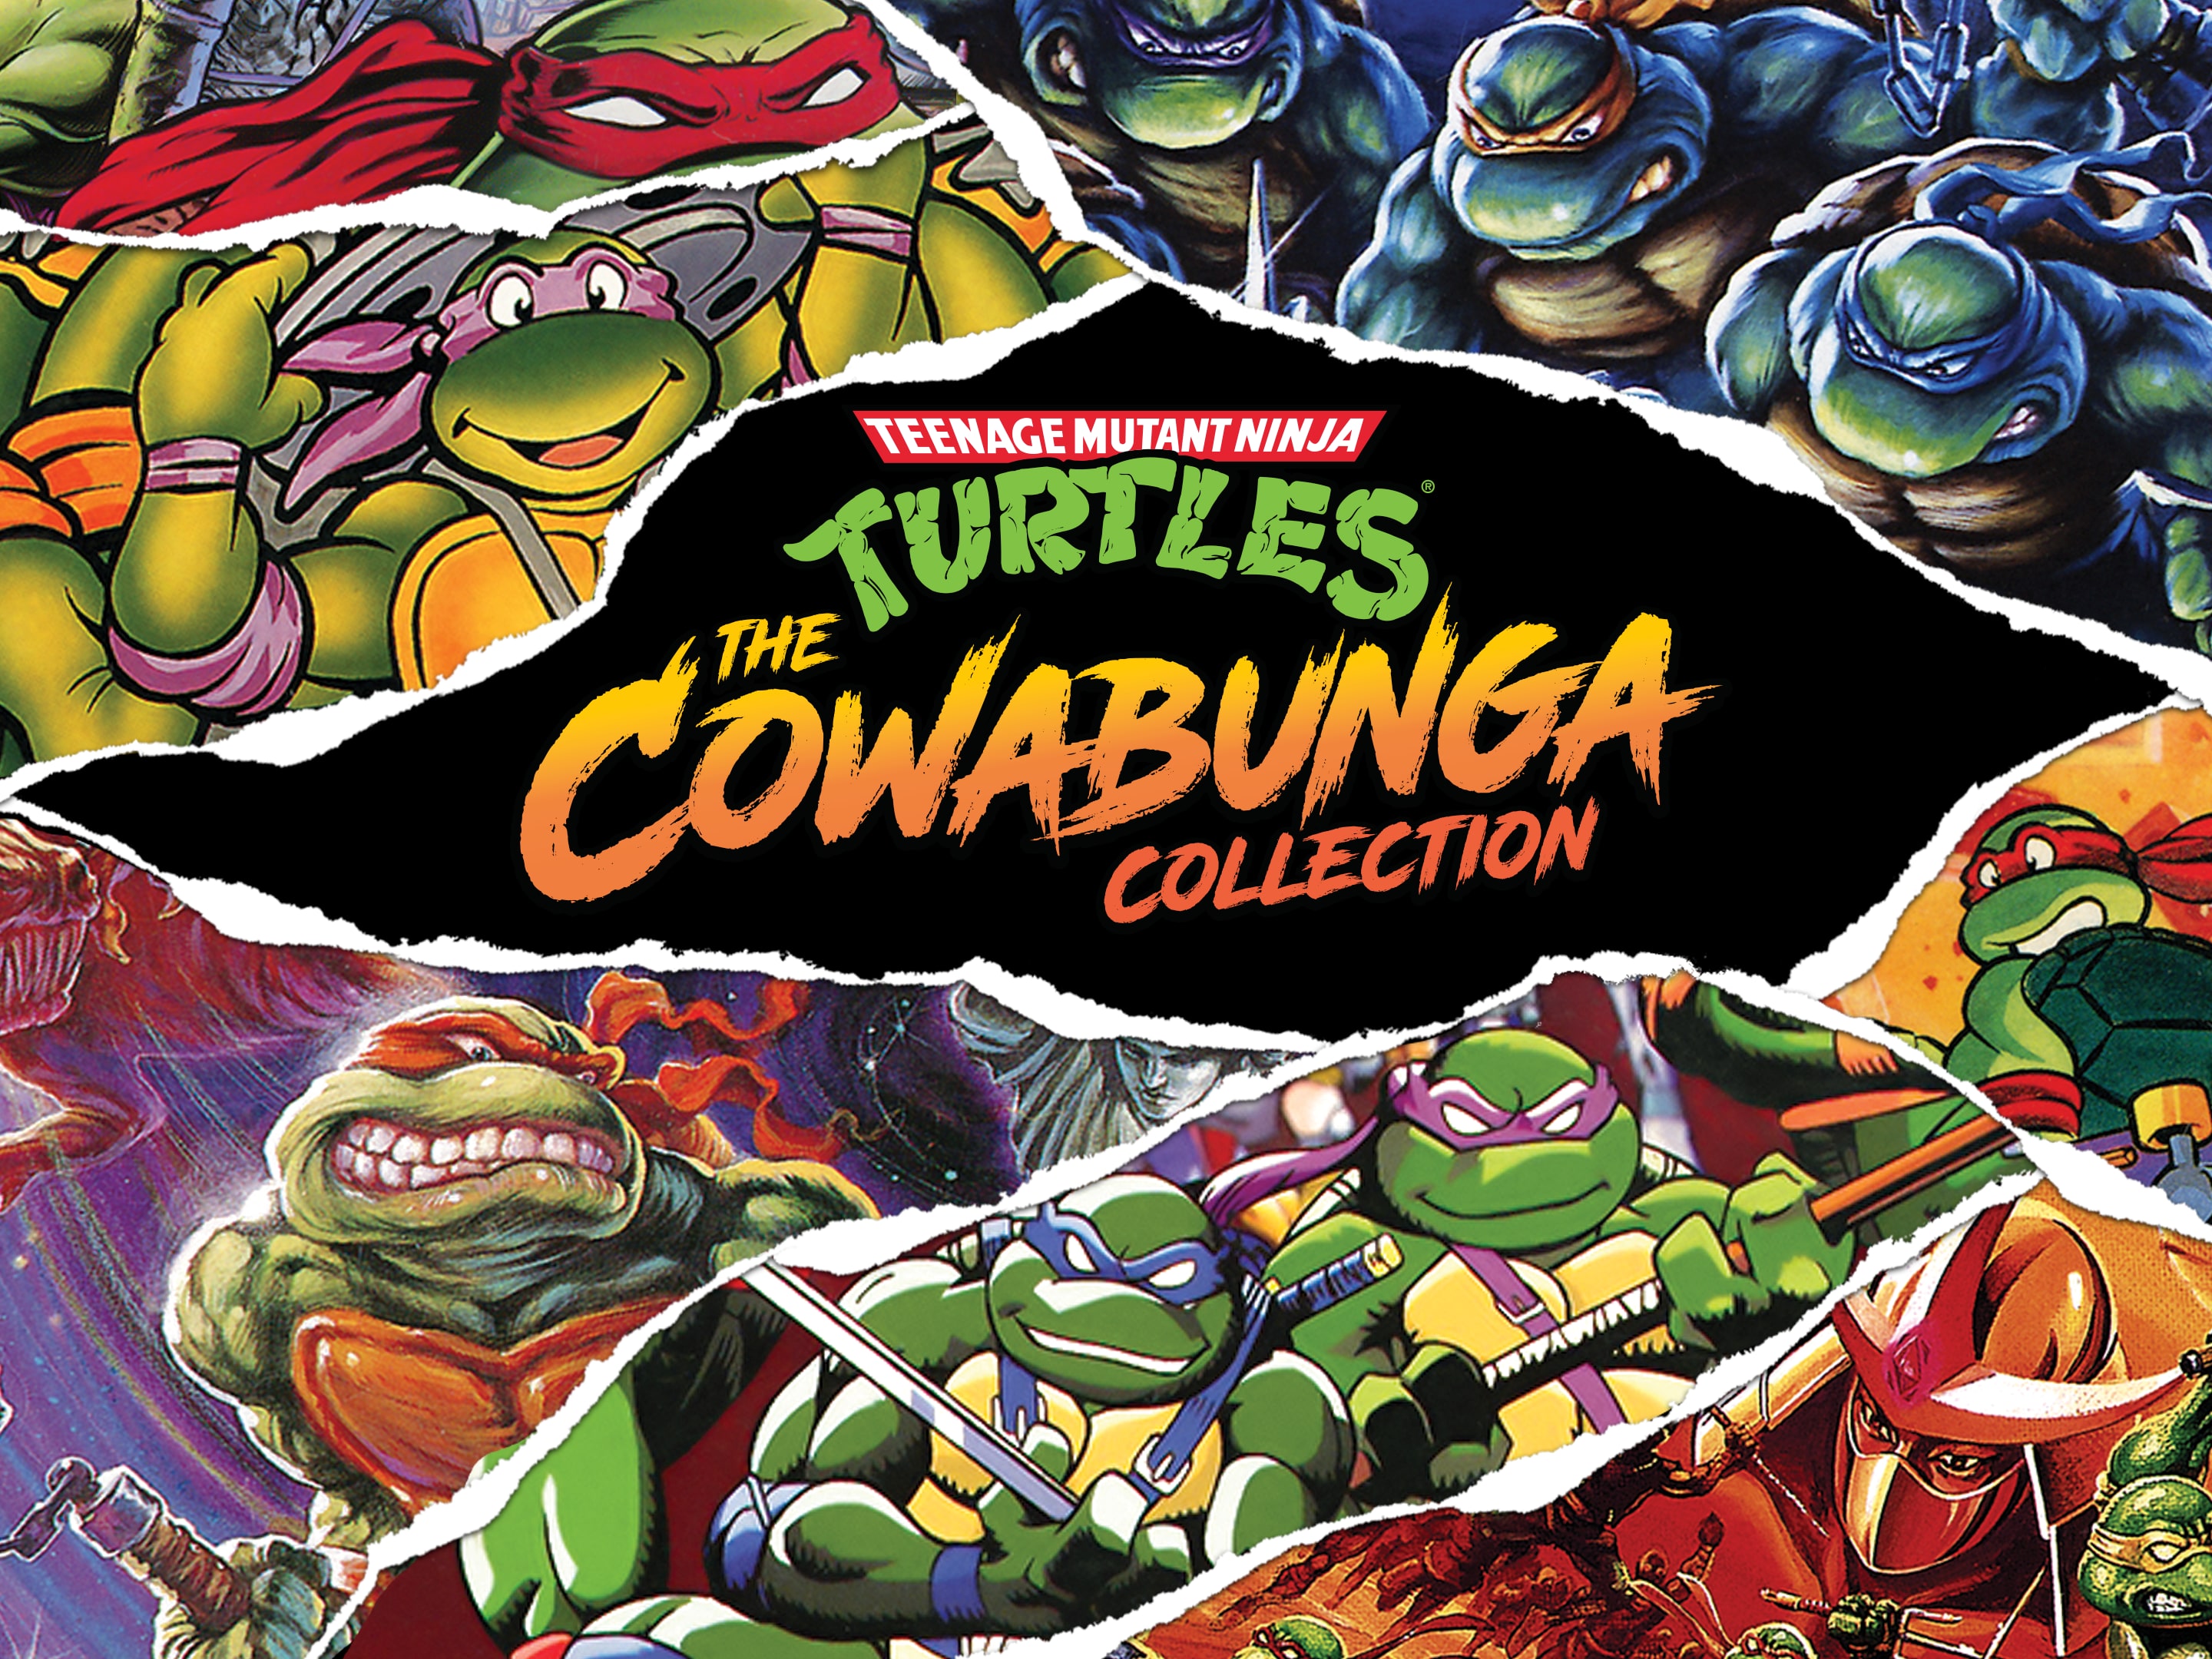 Teenage Mutant Ninja Turtles: The & PS4 Cowabunga PS5 Collection